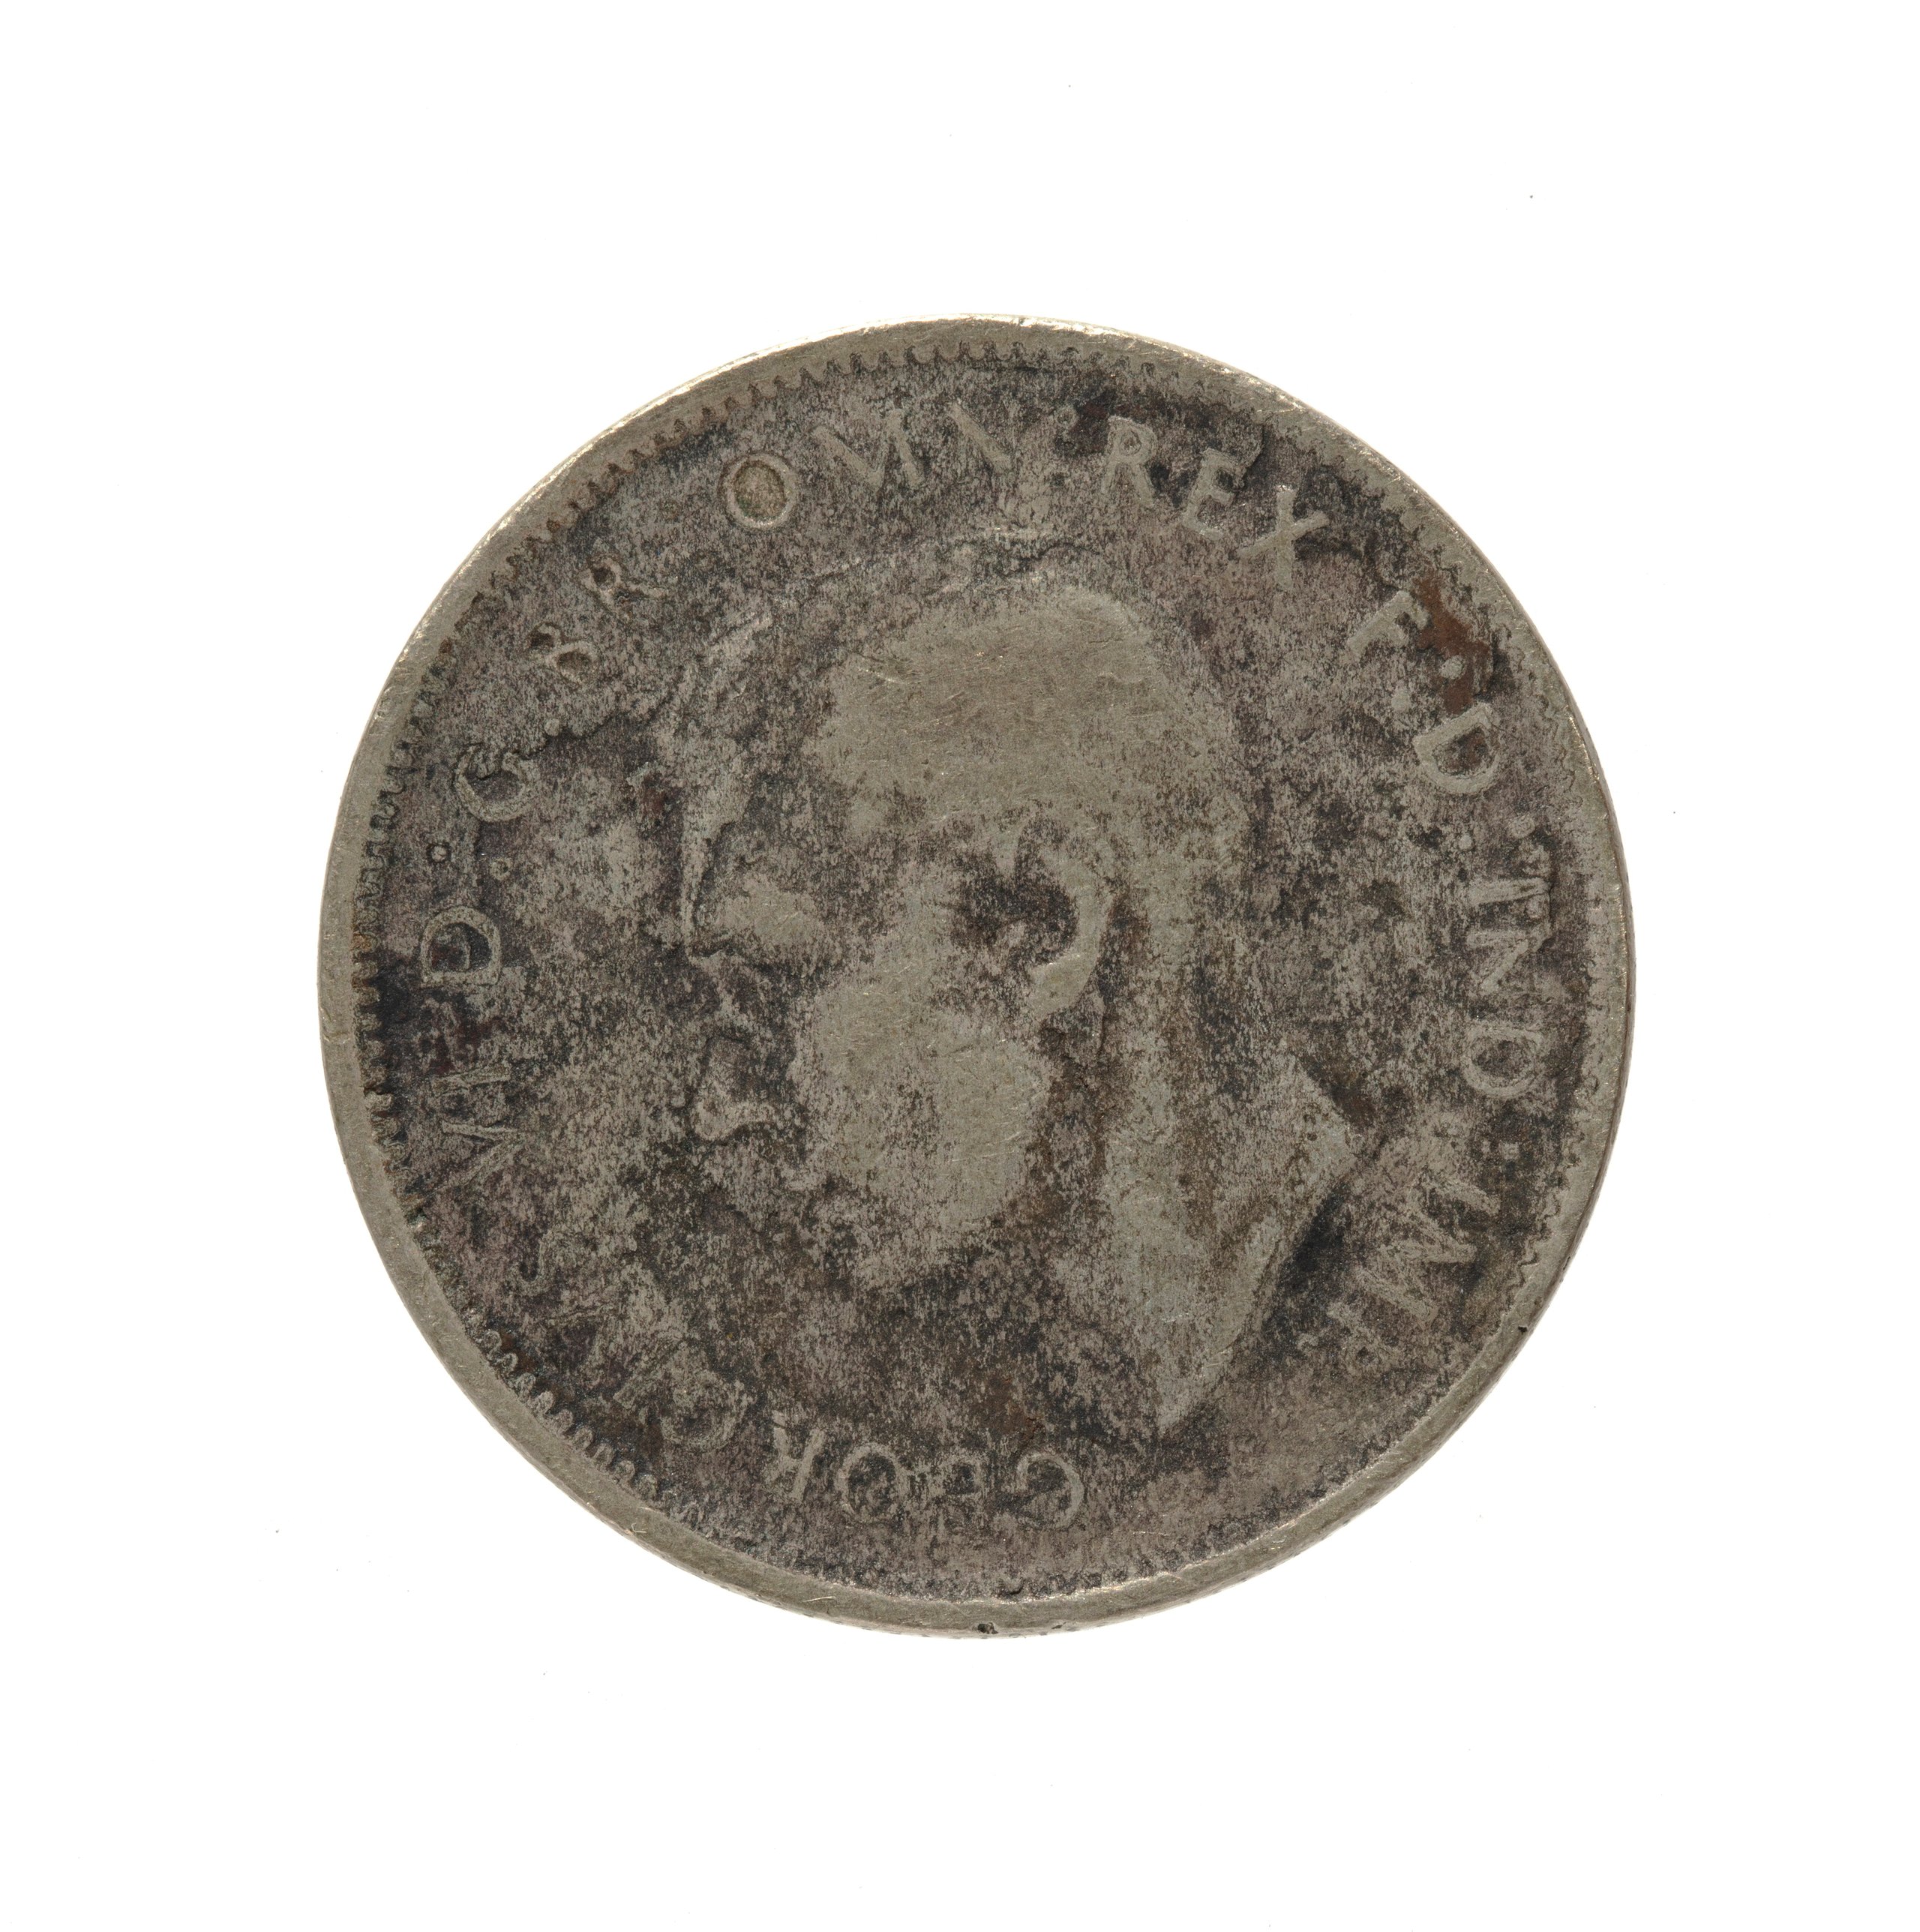 Australian counterfeit Florin coin